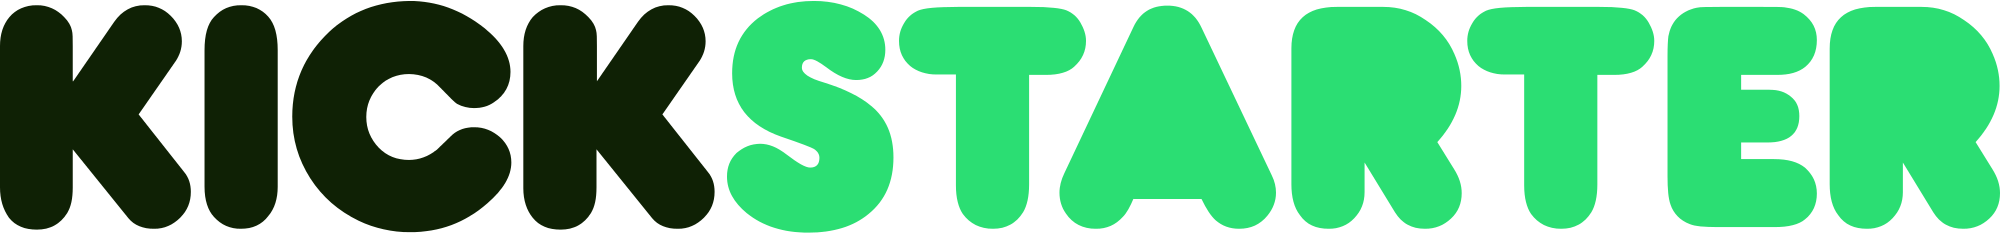 Image result for kickstarter logo